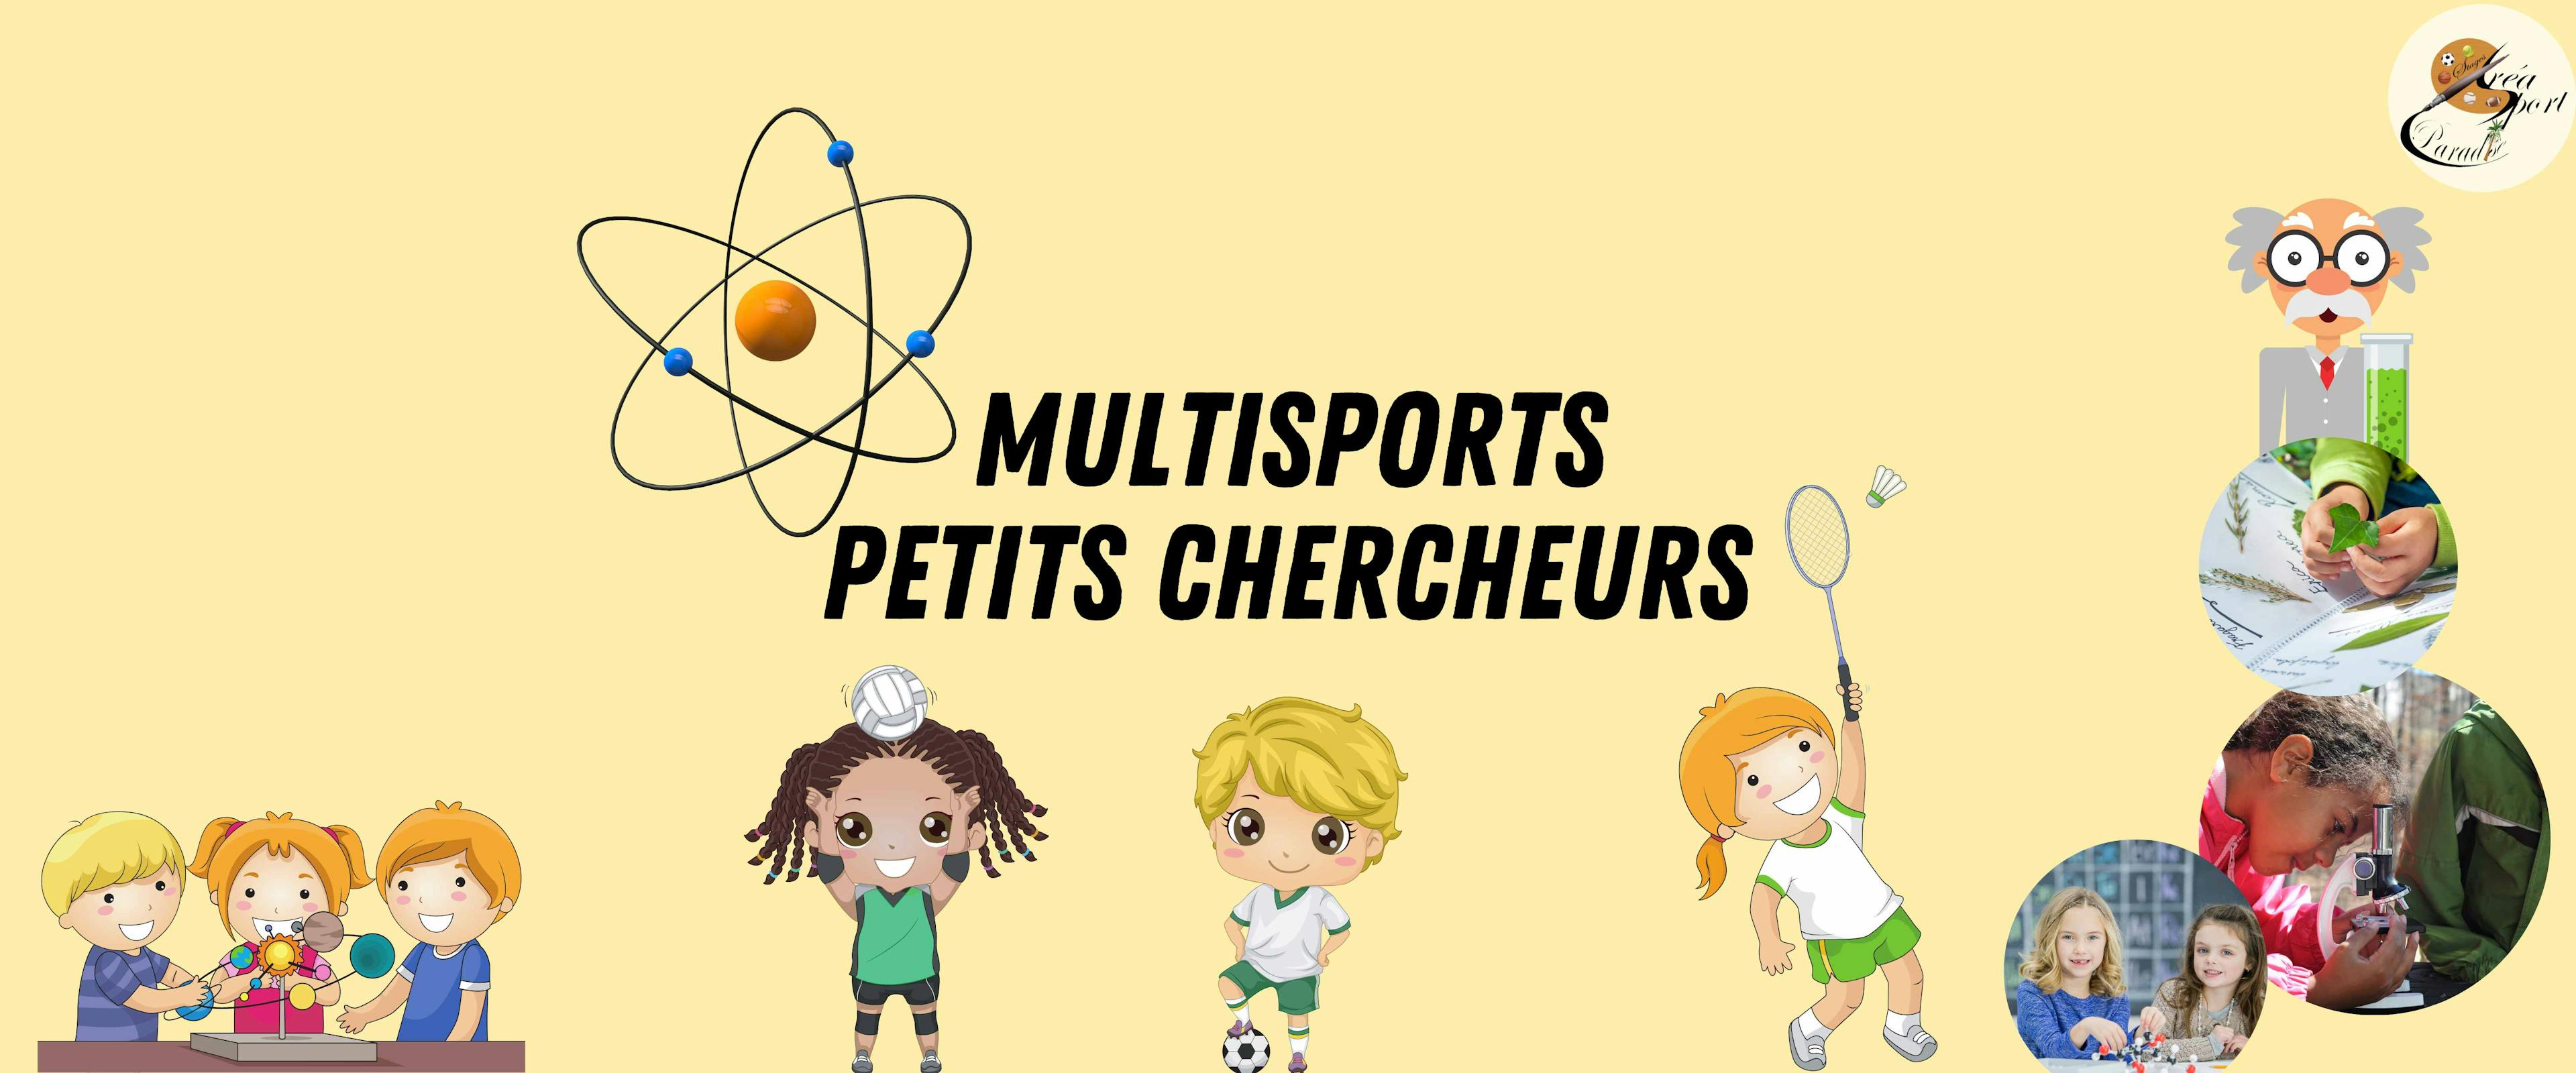 Printemps S2 : Multisports- Petits chercheurs